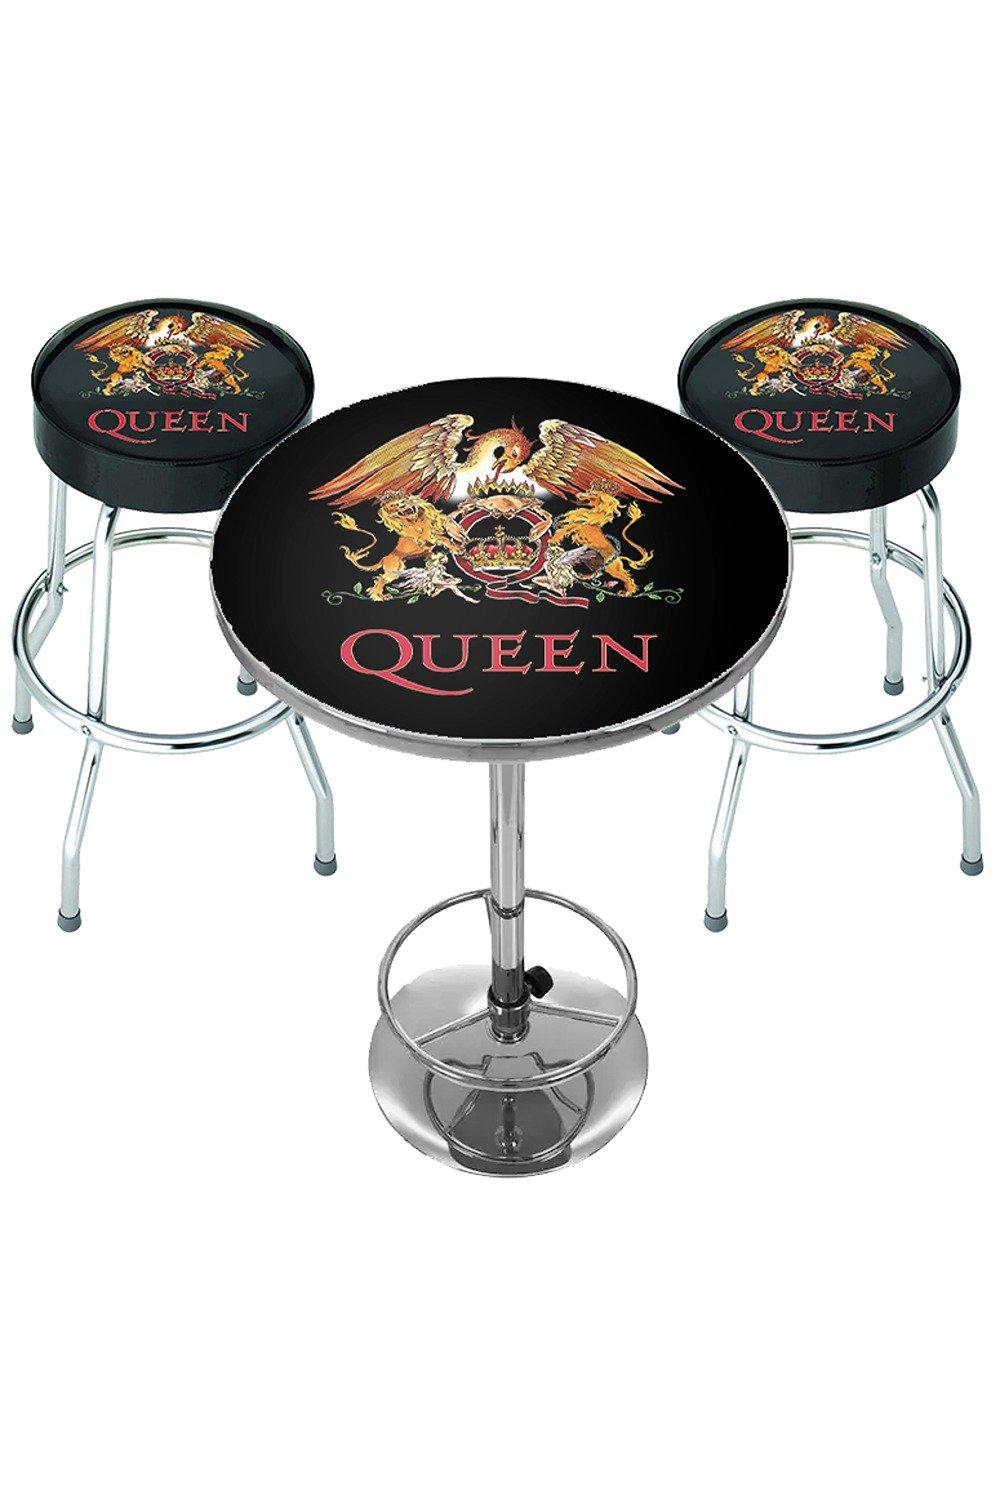 Queen Bar Set - Classic Crest